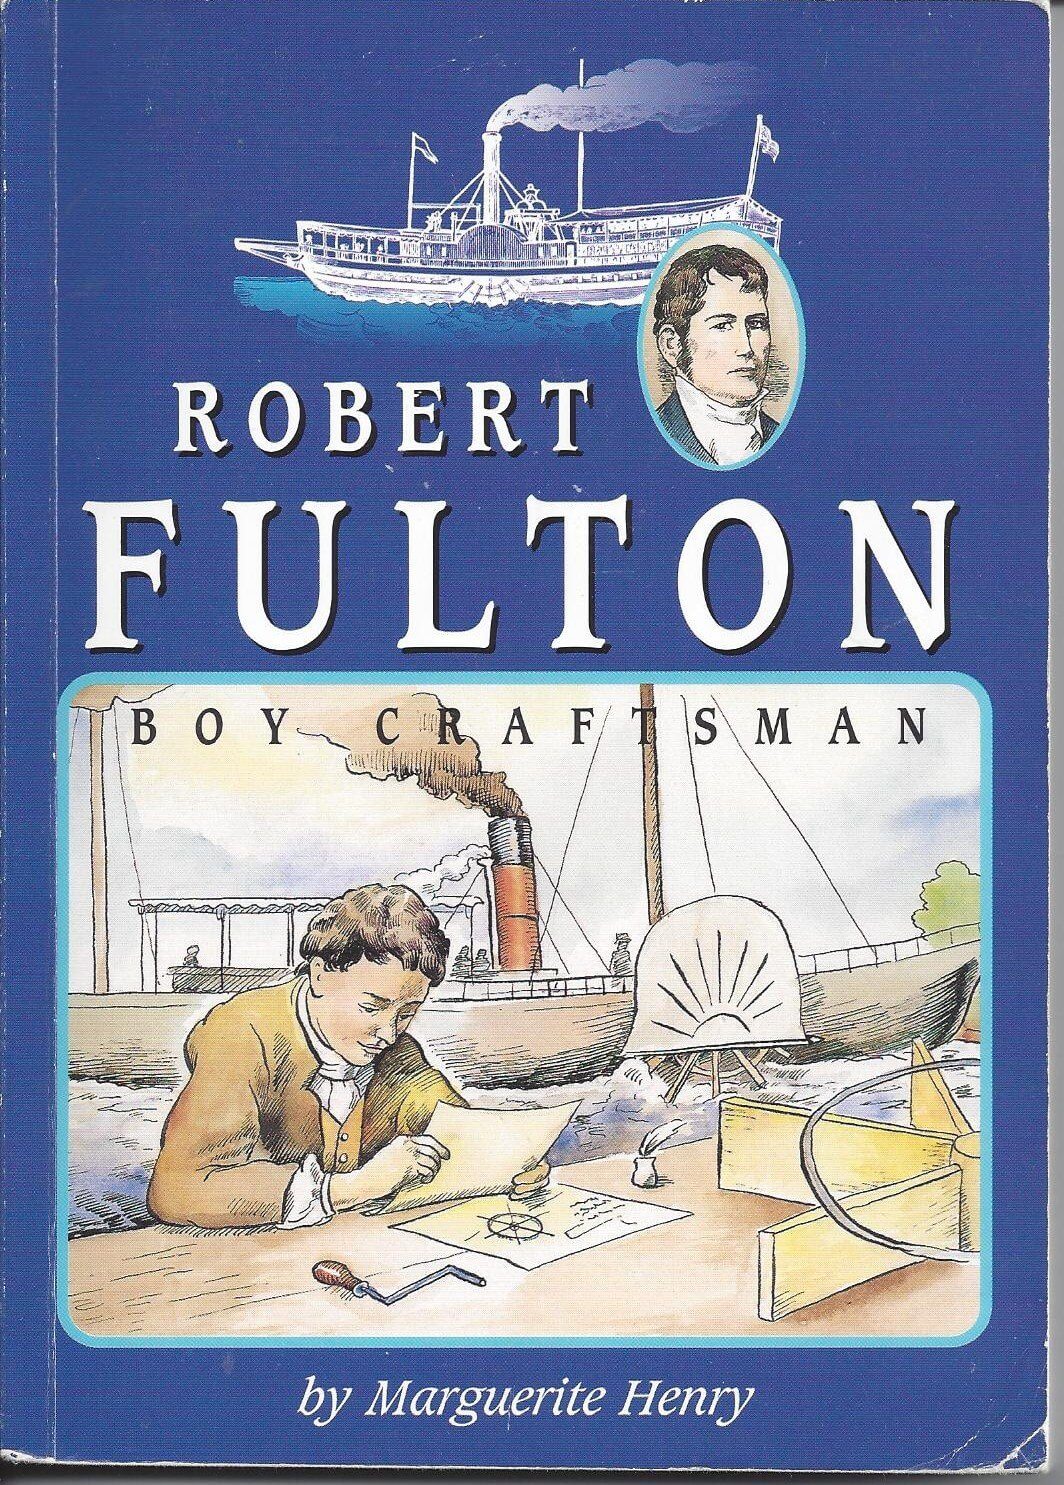 Book: Robert Fulton Boy Craftsman